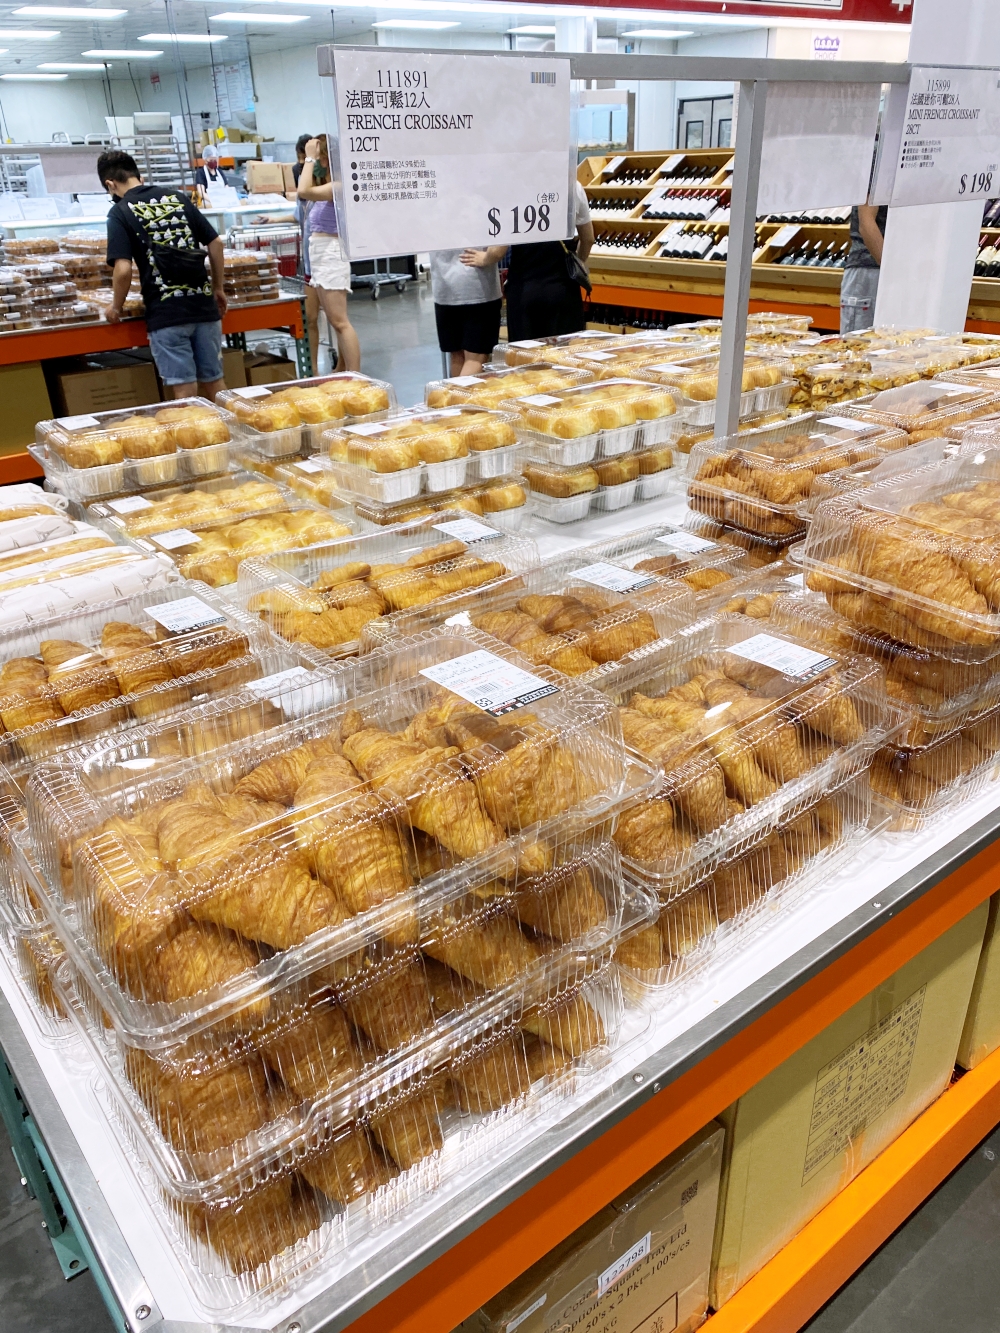 COSTCO好市多法國可鬆麵包售價